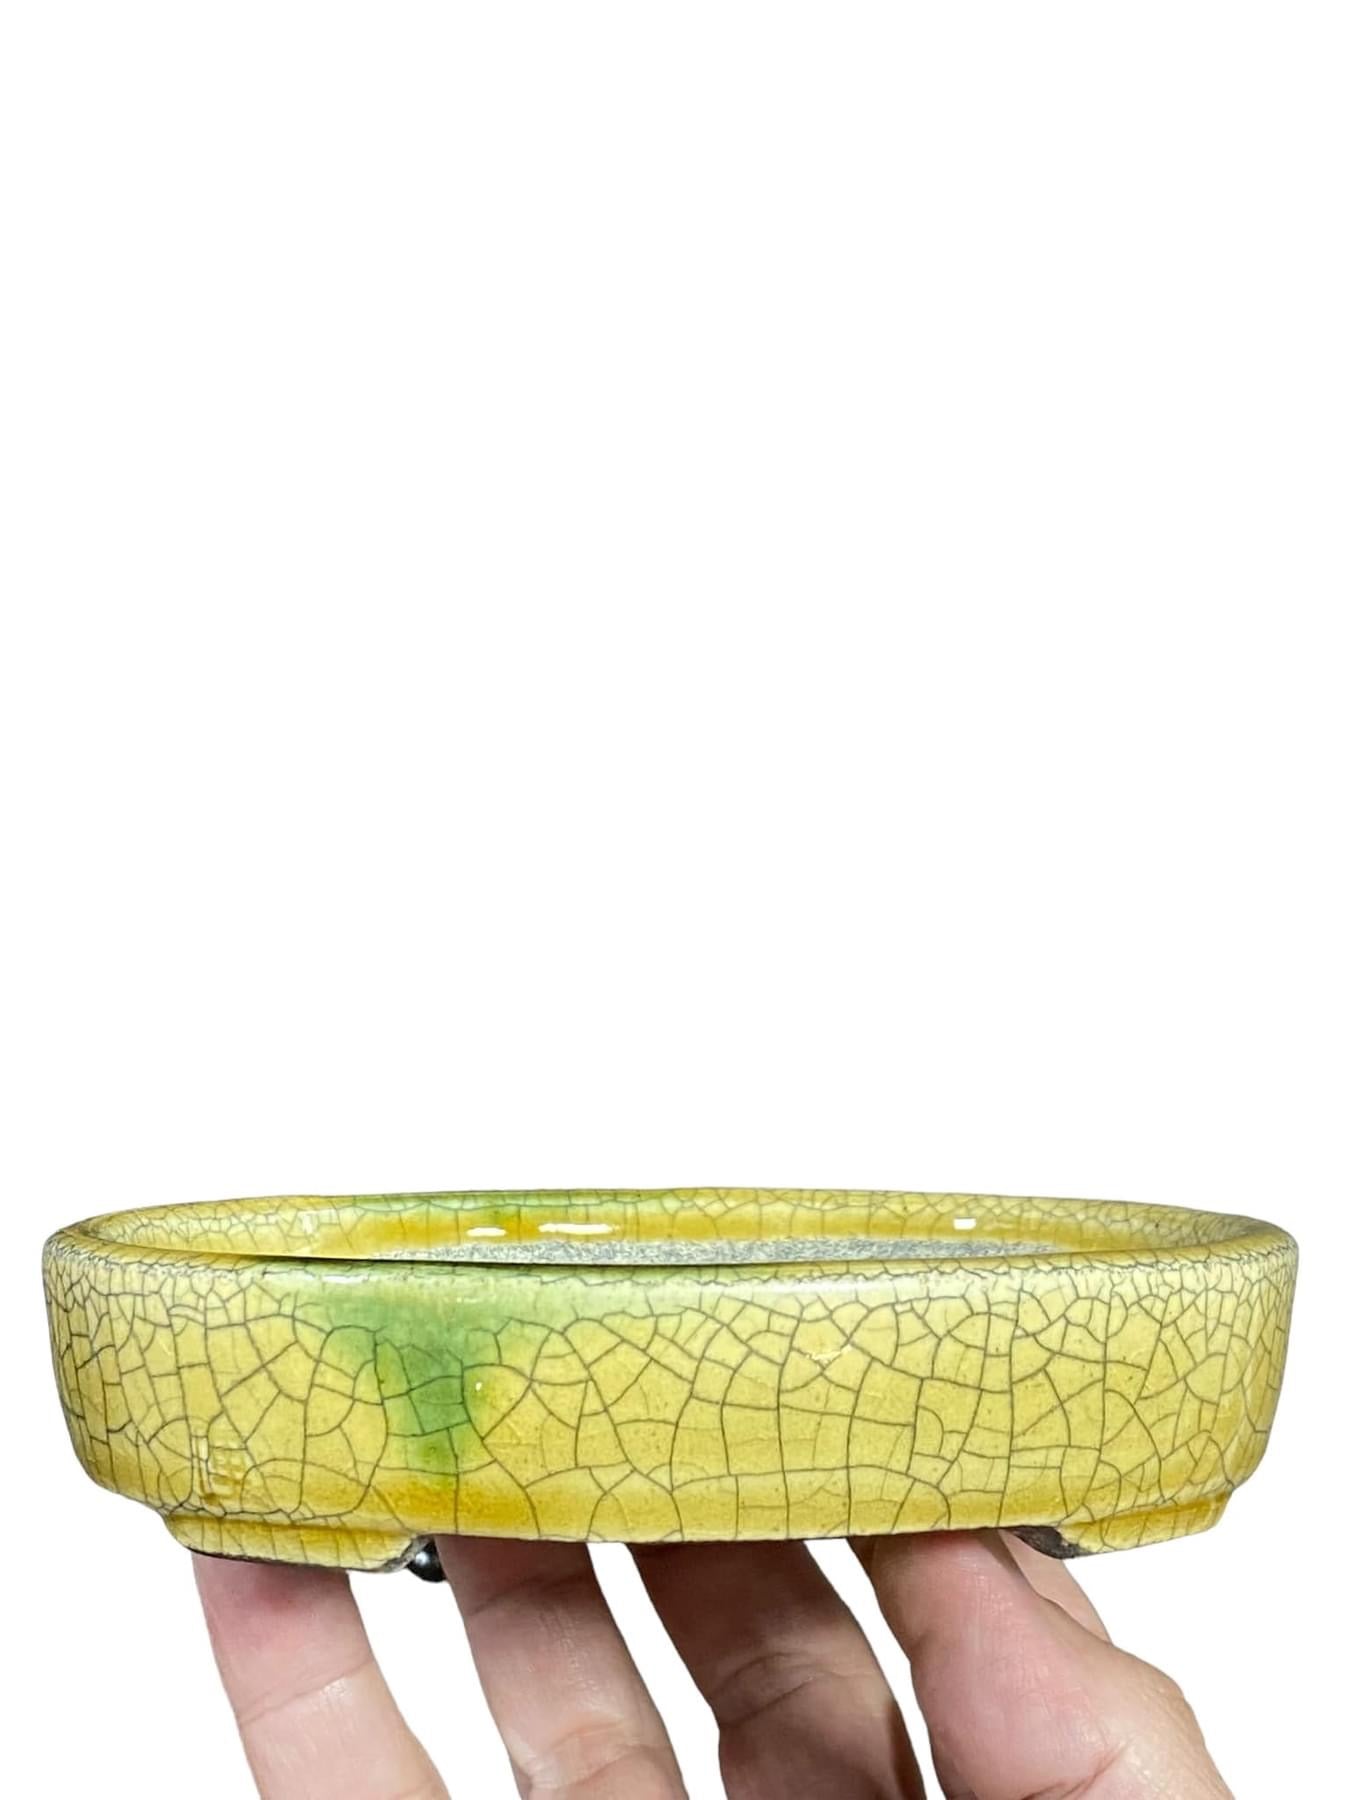 Satomi Terahata - Crackle Glazed Oval Bonsai Pot (5-9/16” wide)